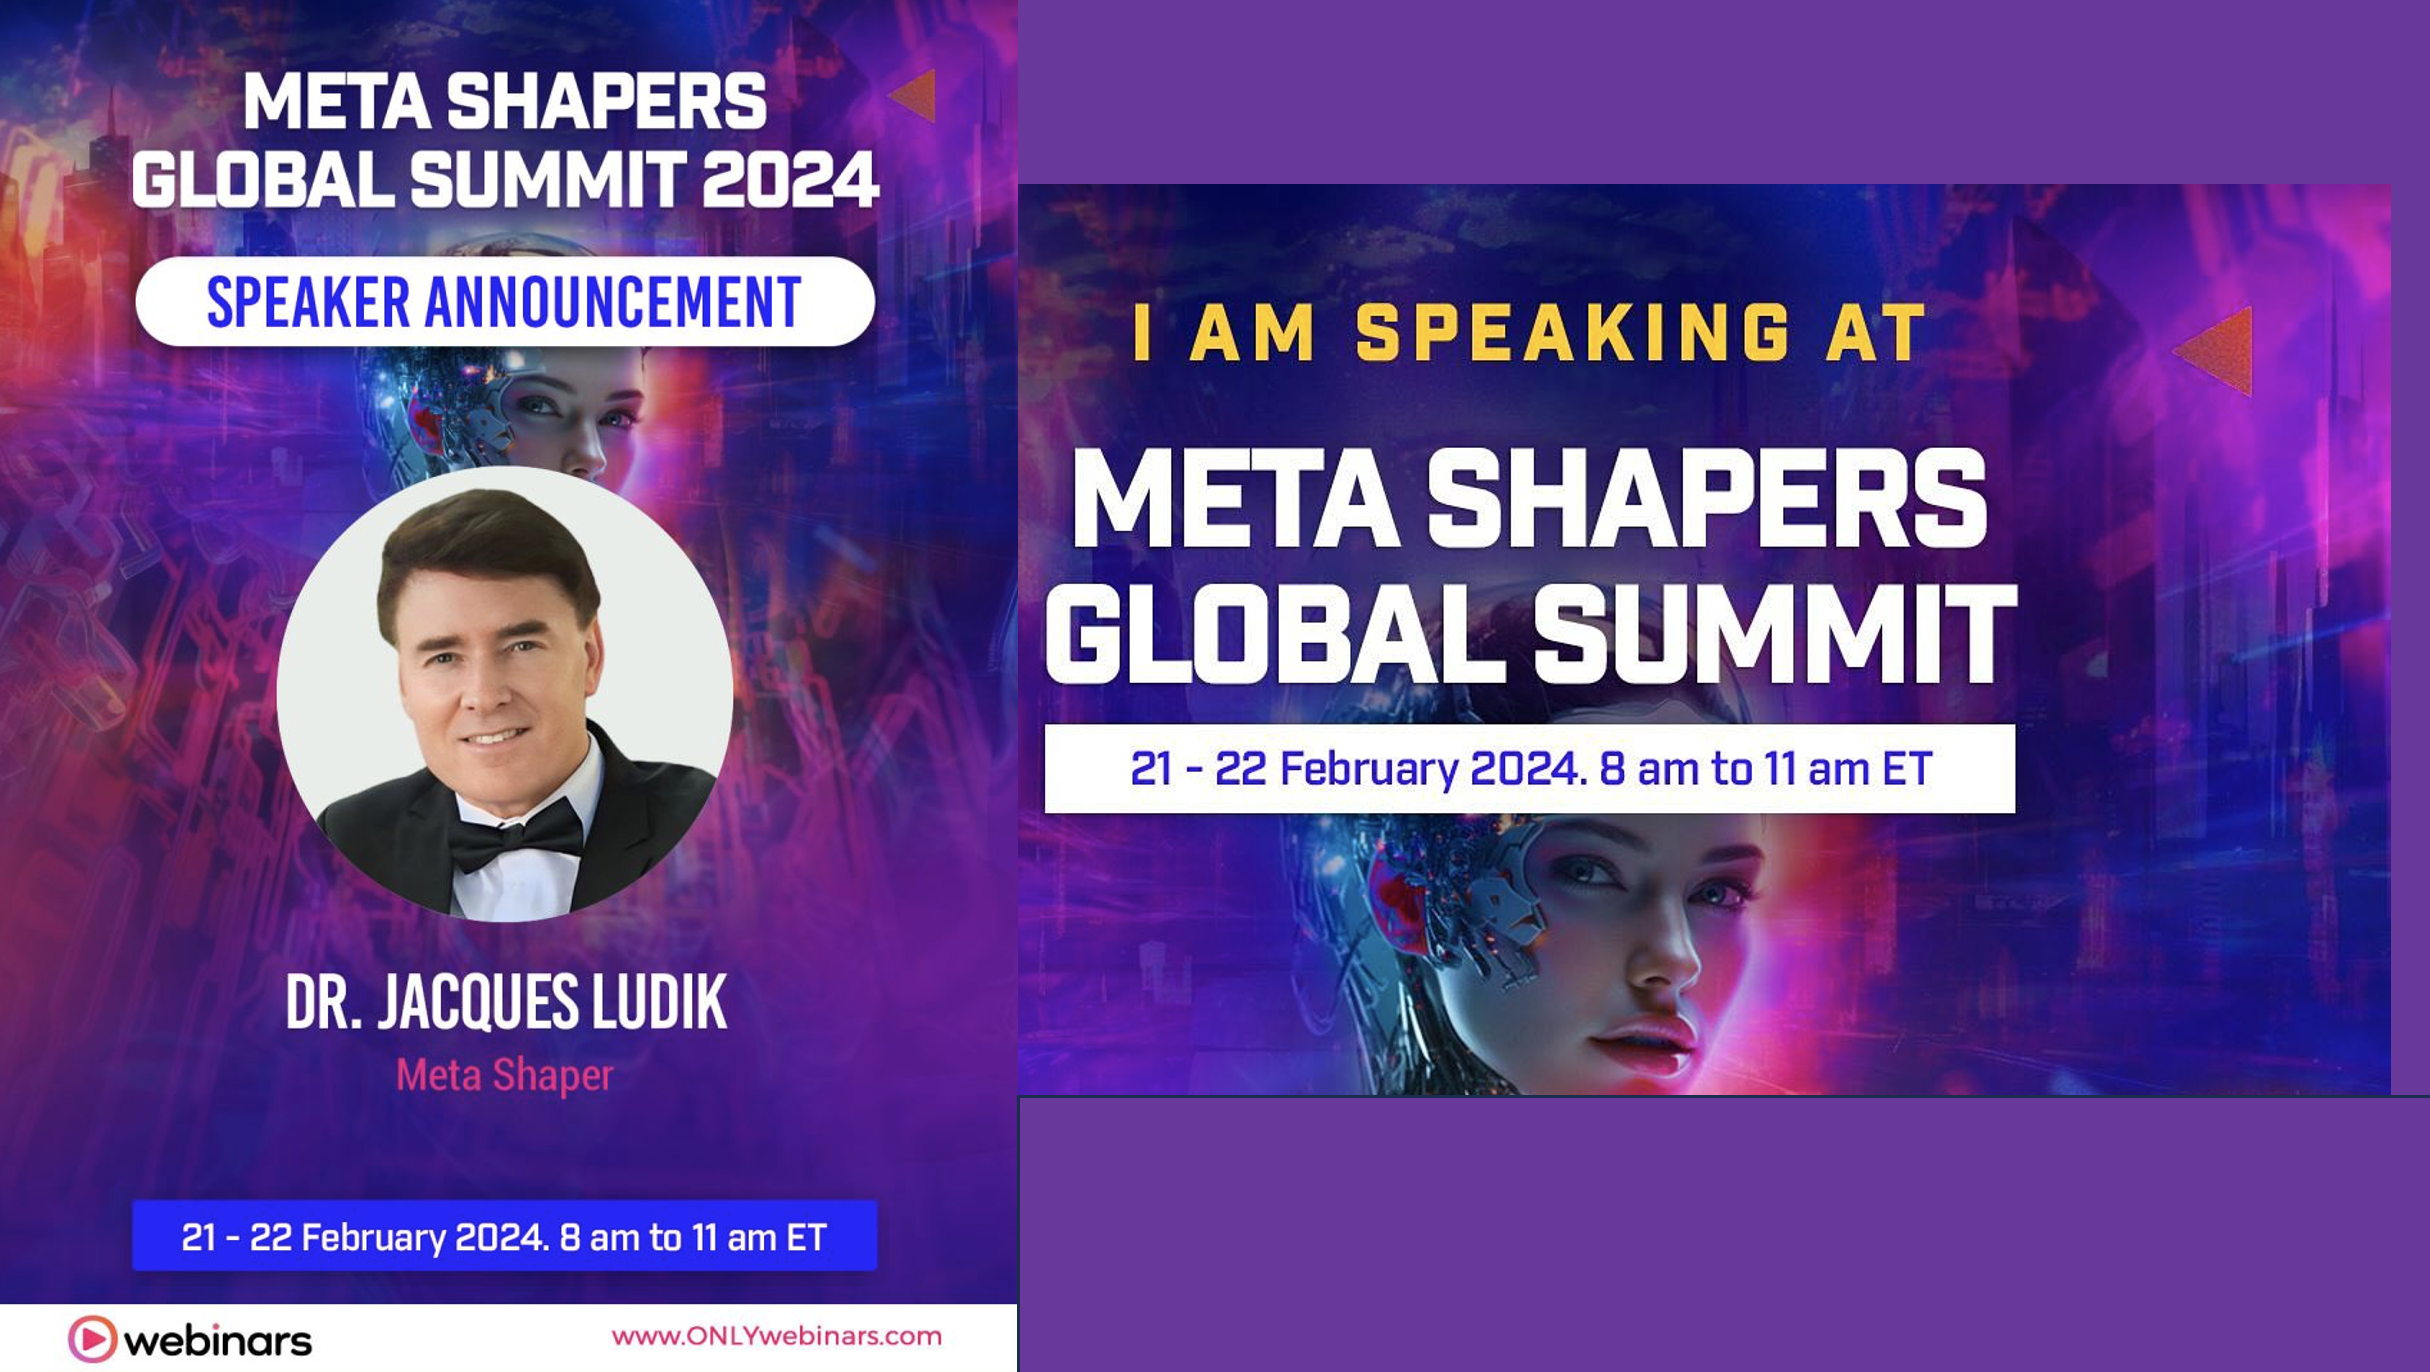 Meta Shapers Global Summit on 21-22 February 2024 – Dr Jacques Ludik